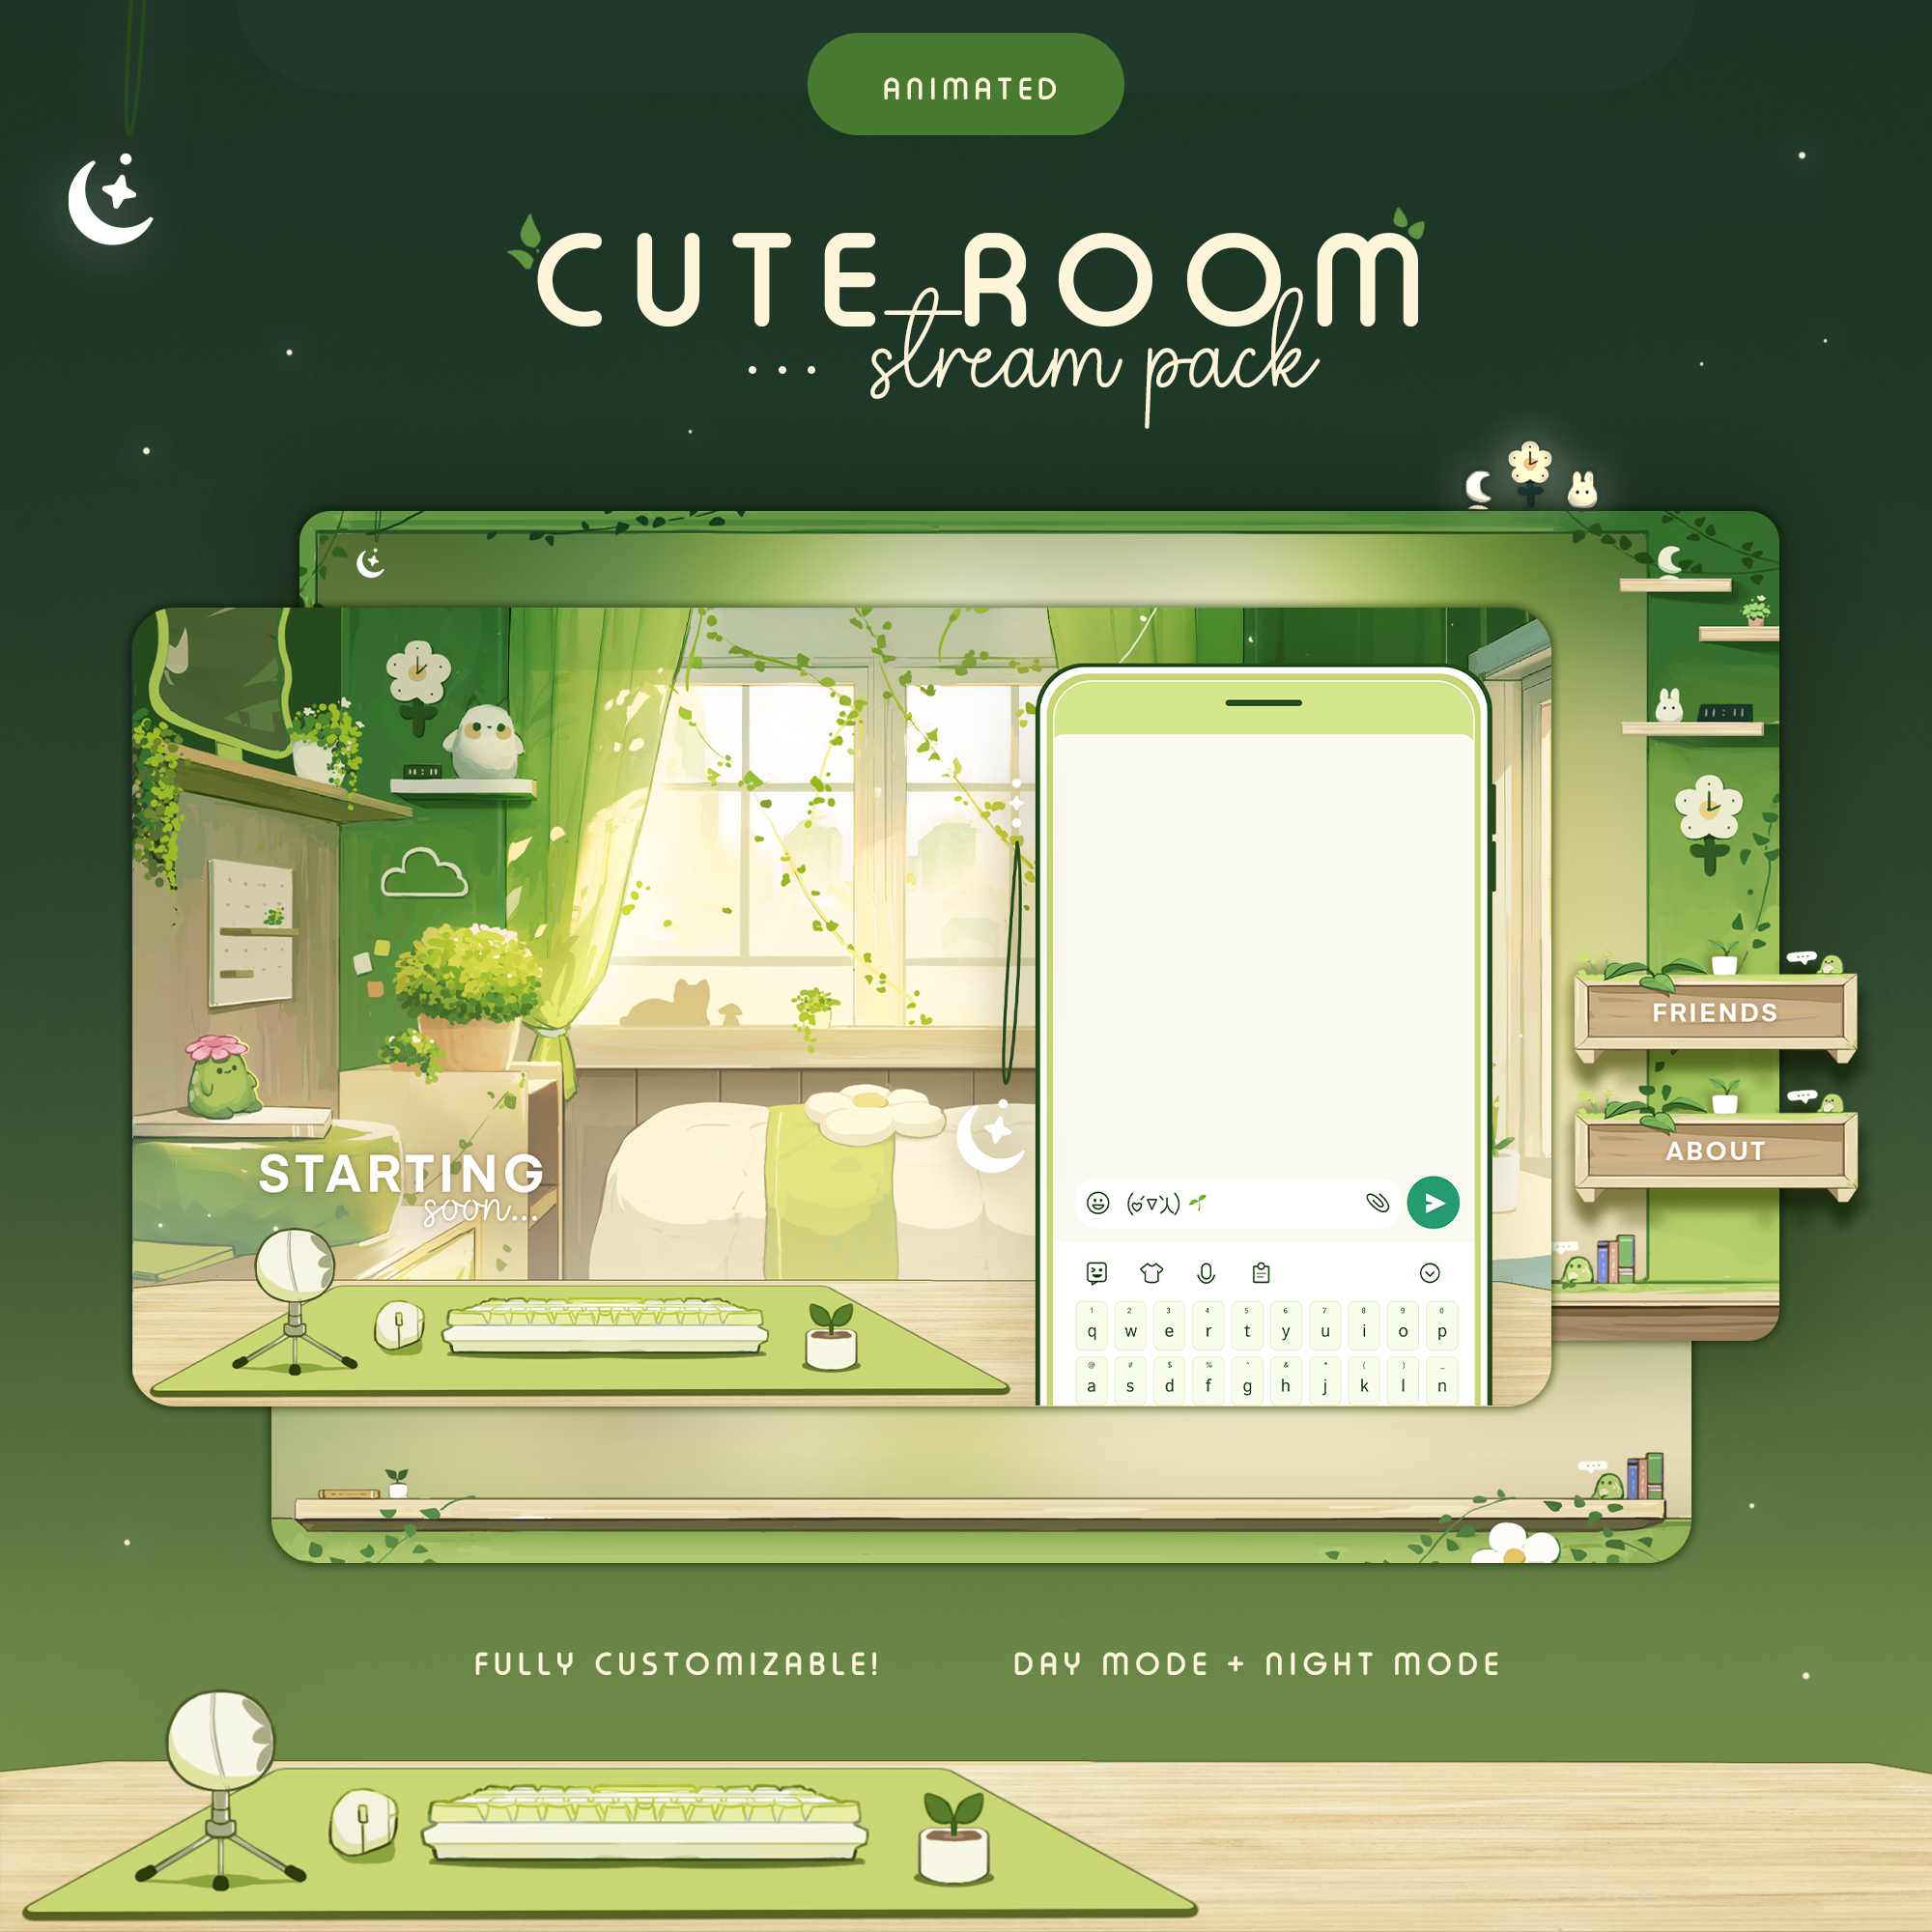 Cute Room | Animated Stream Overlay Pack